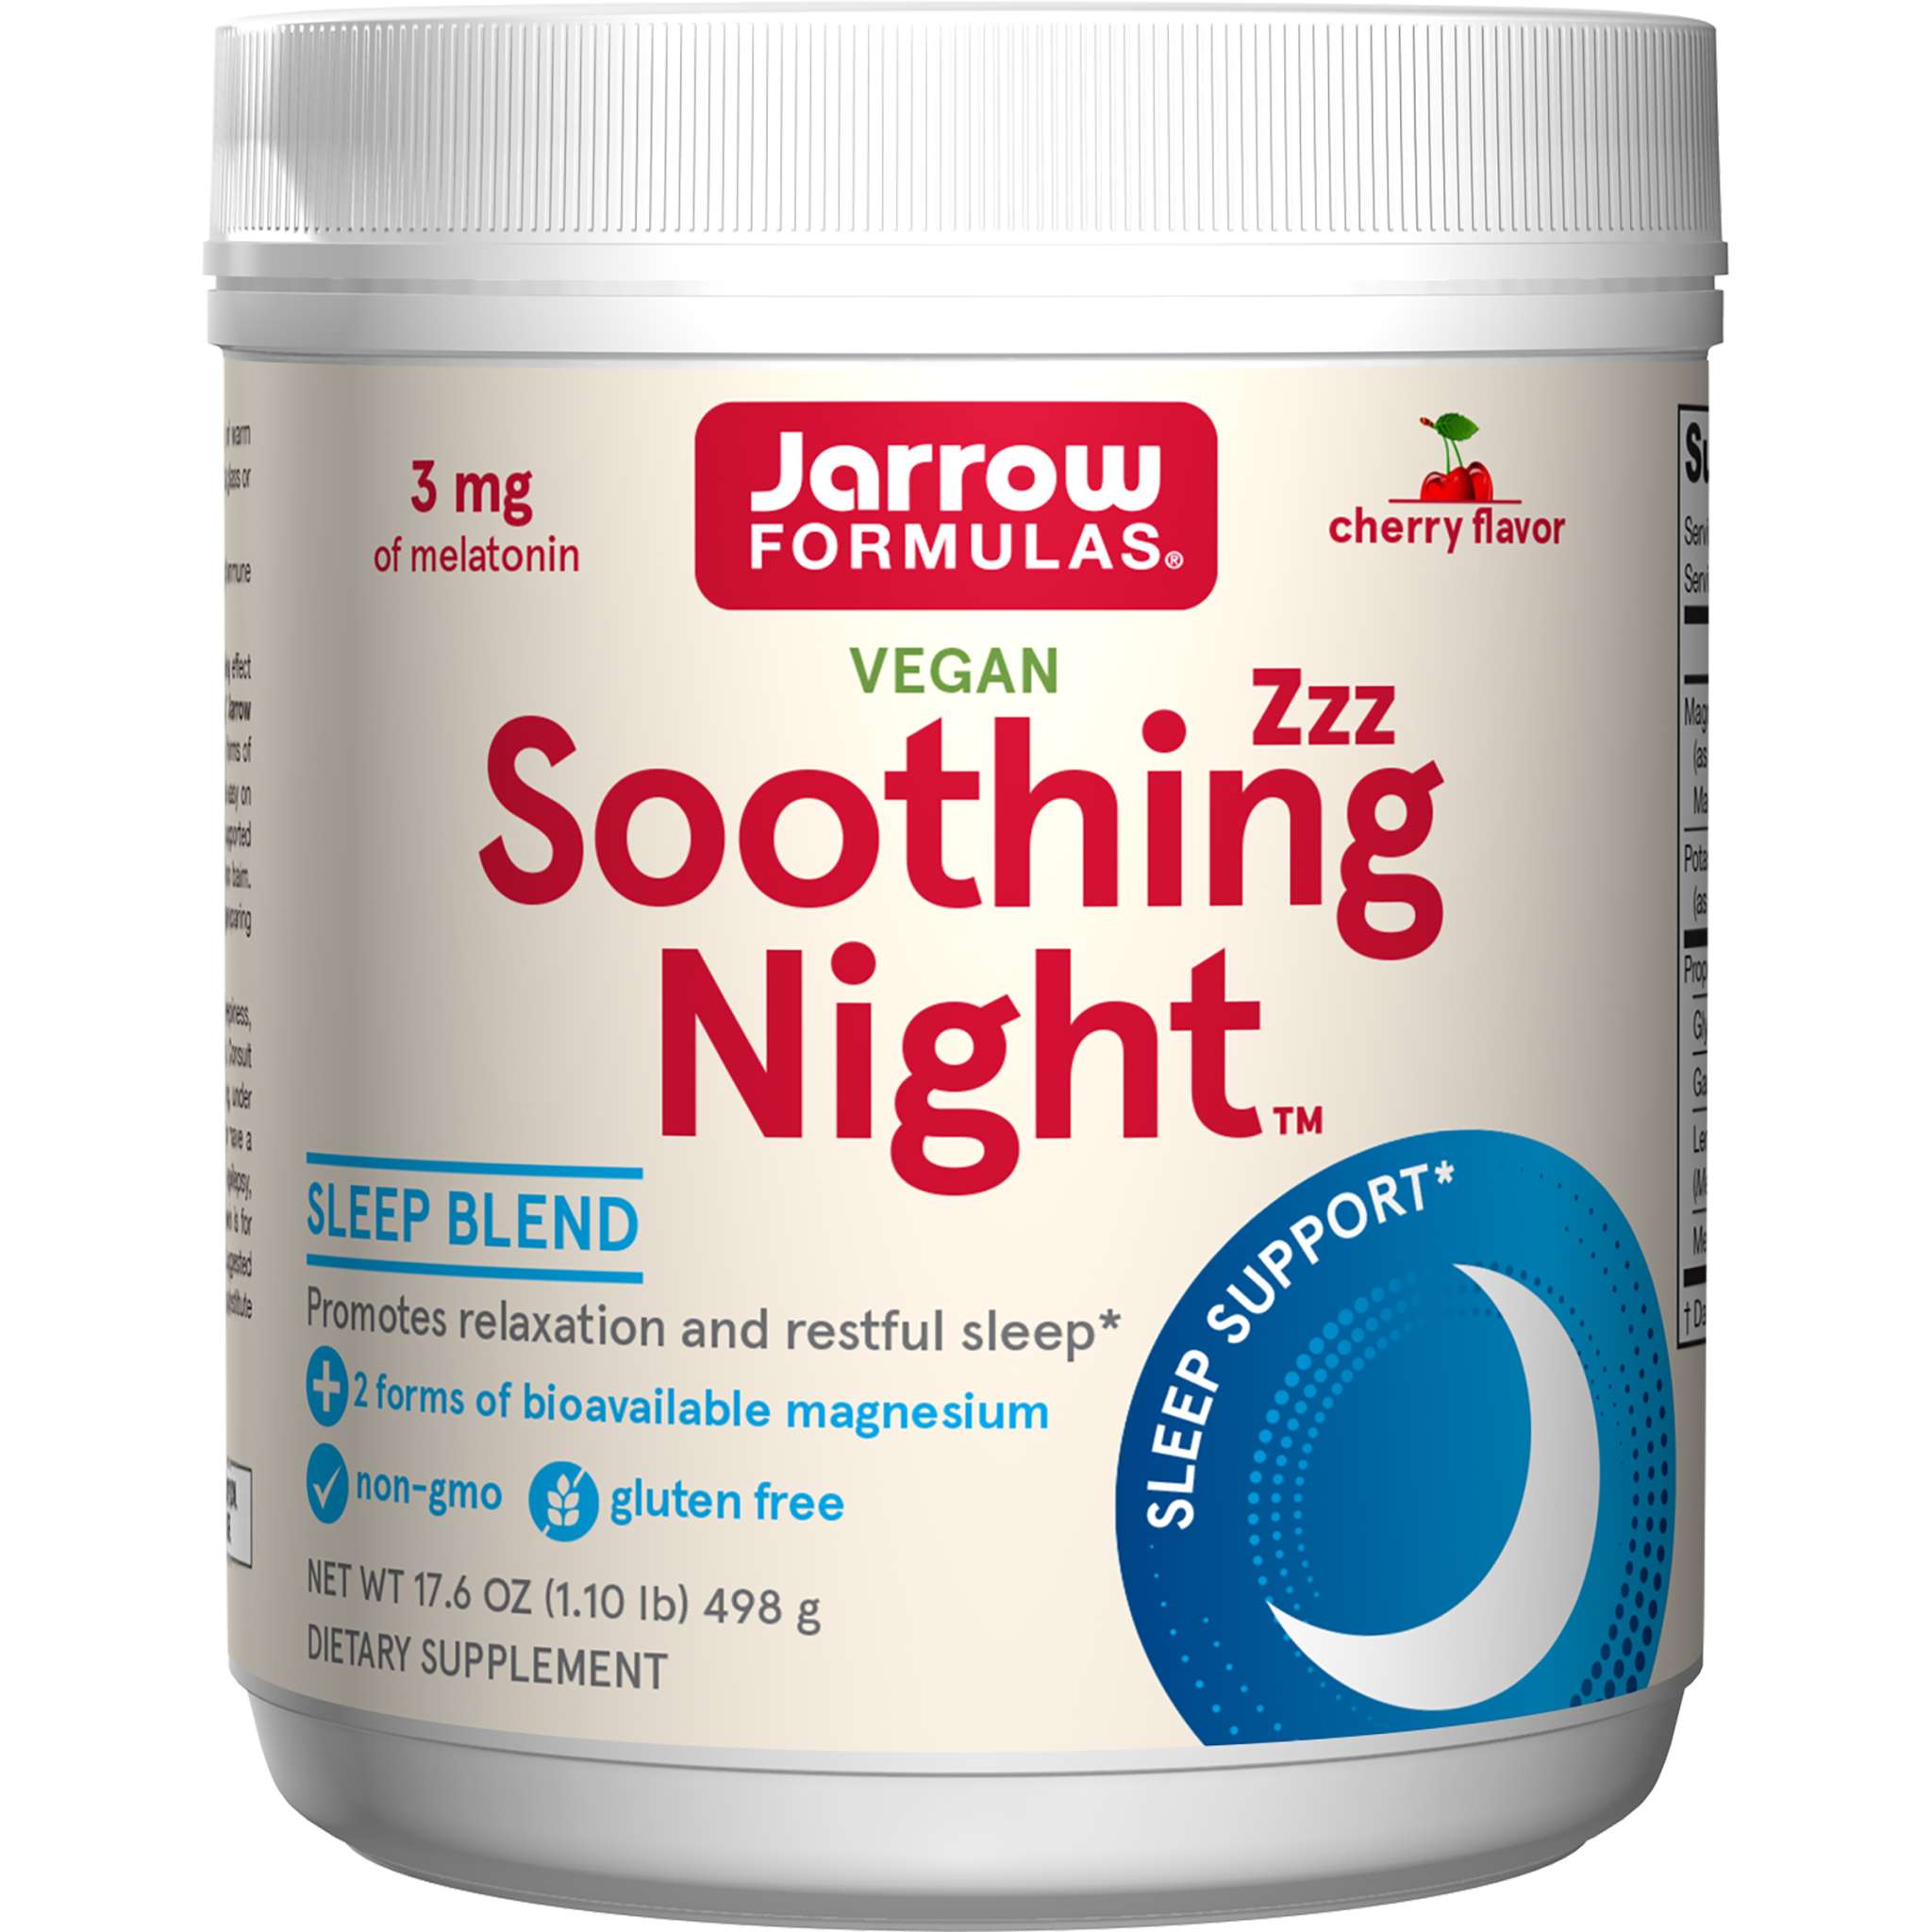 Jarrow Formulas - Soothing Night powder